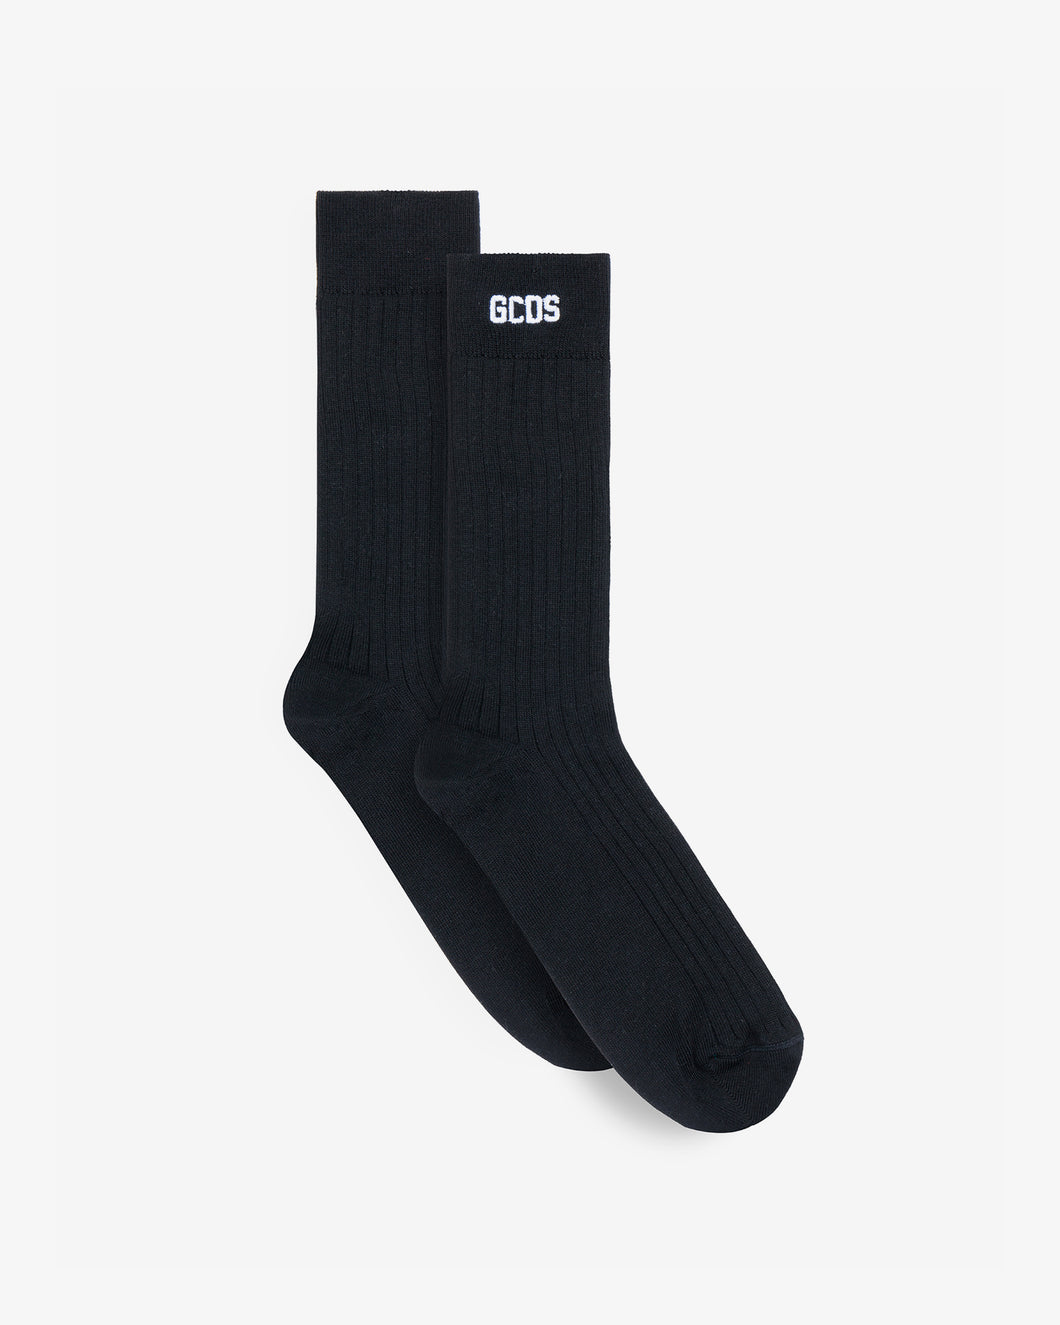 Gcds Embroidered Socks